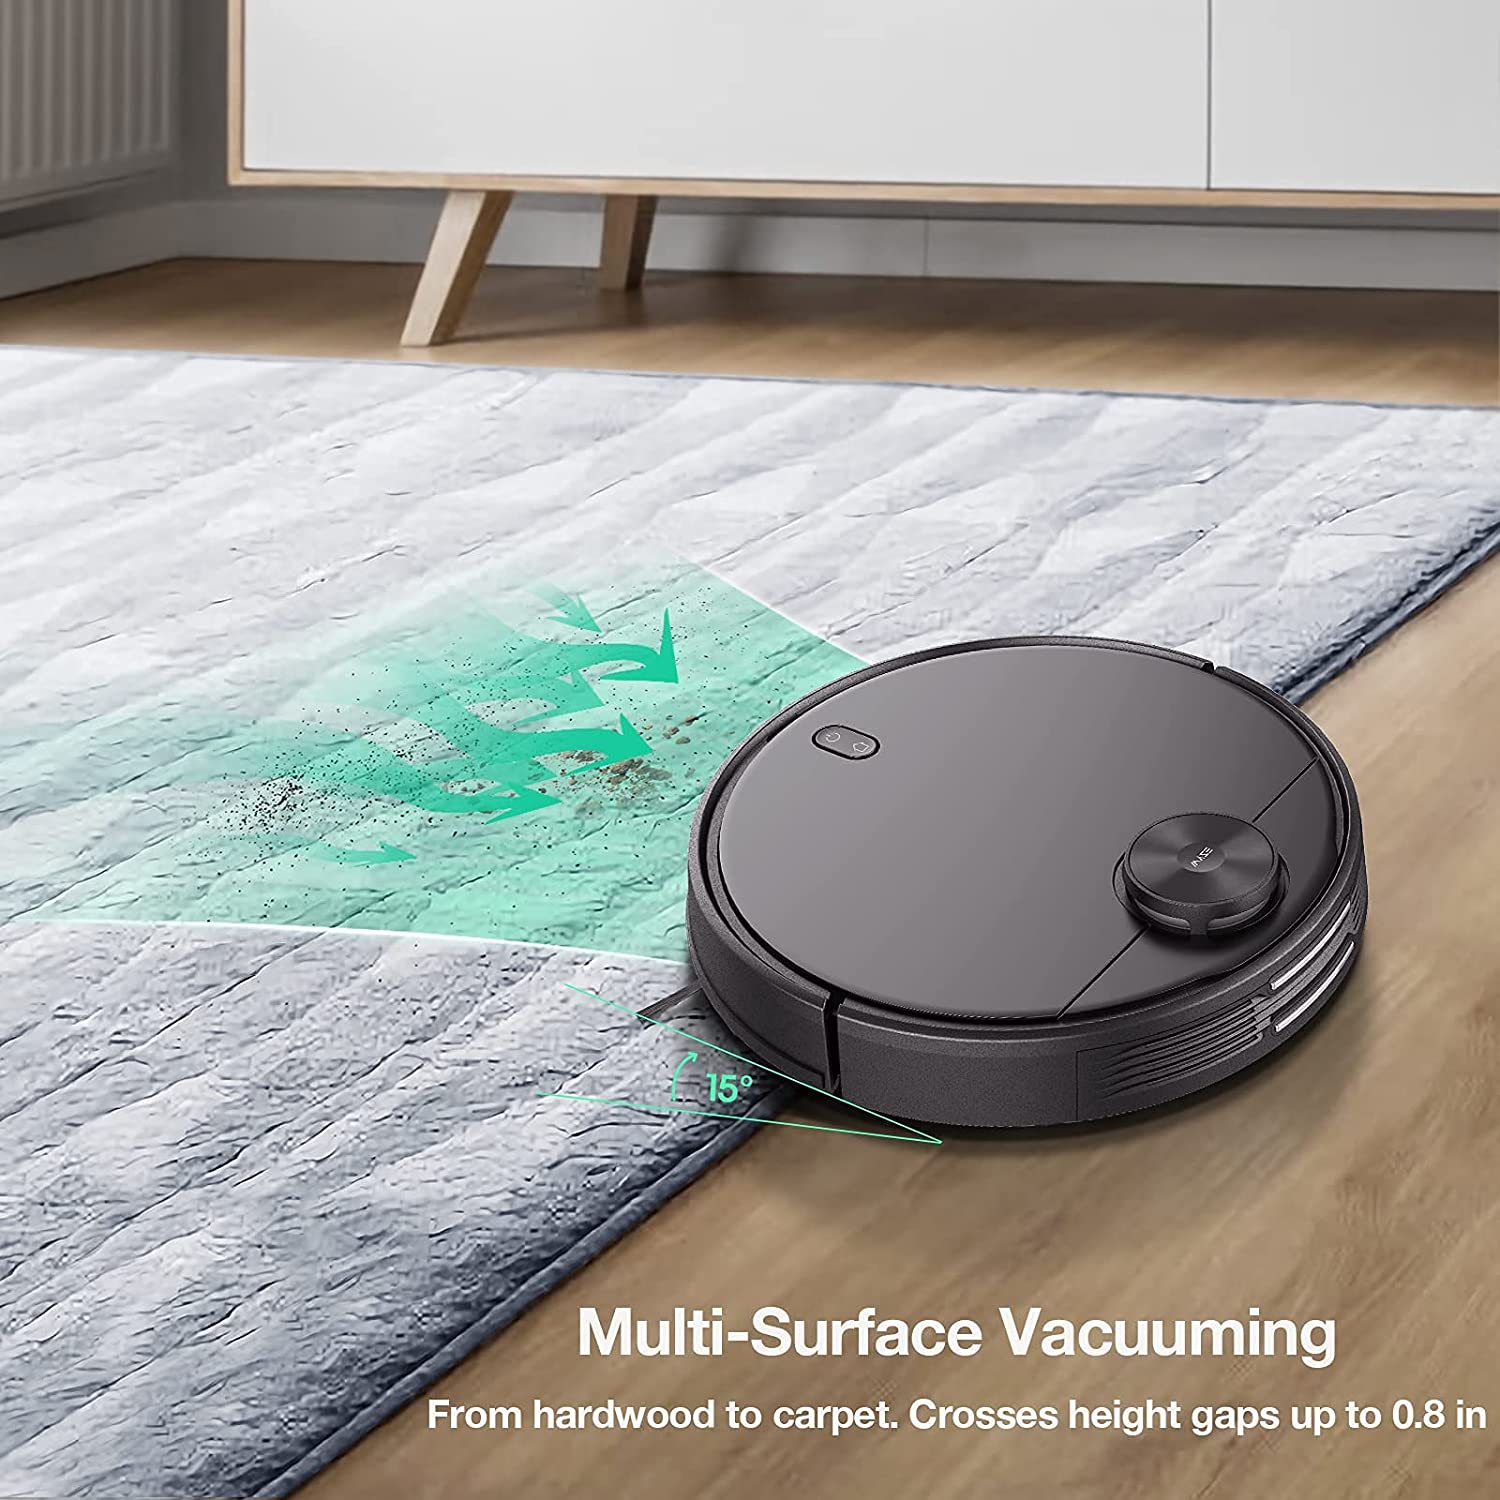 Best Robot Vacuum for Vinyl Plank Floors - Which Robot Vacuum Should You  Buy?